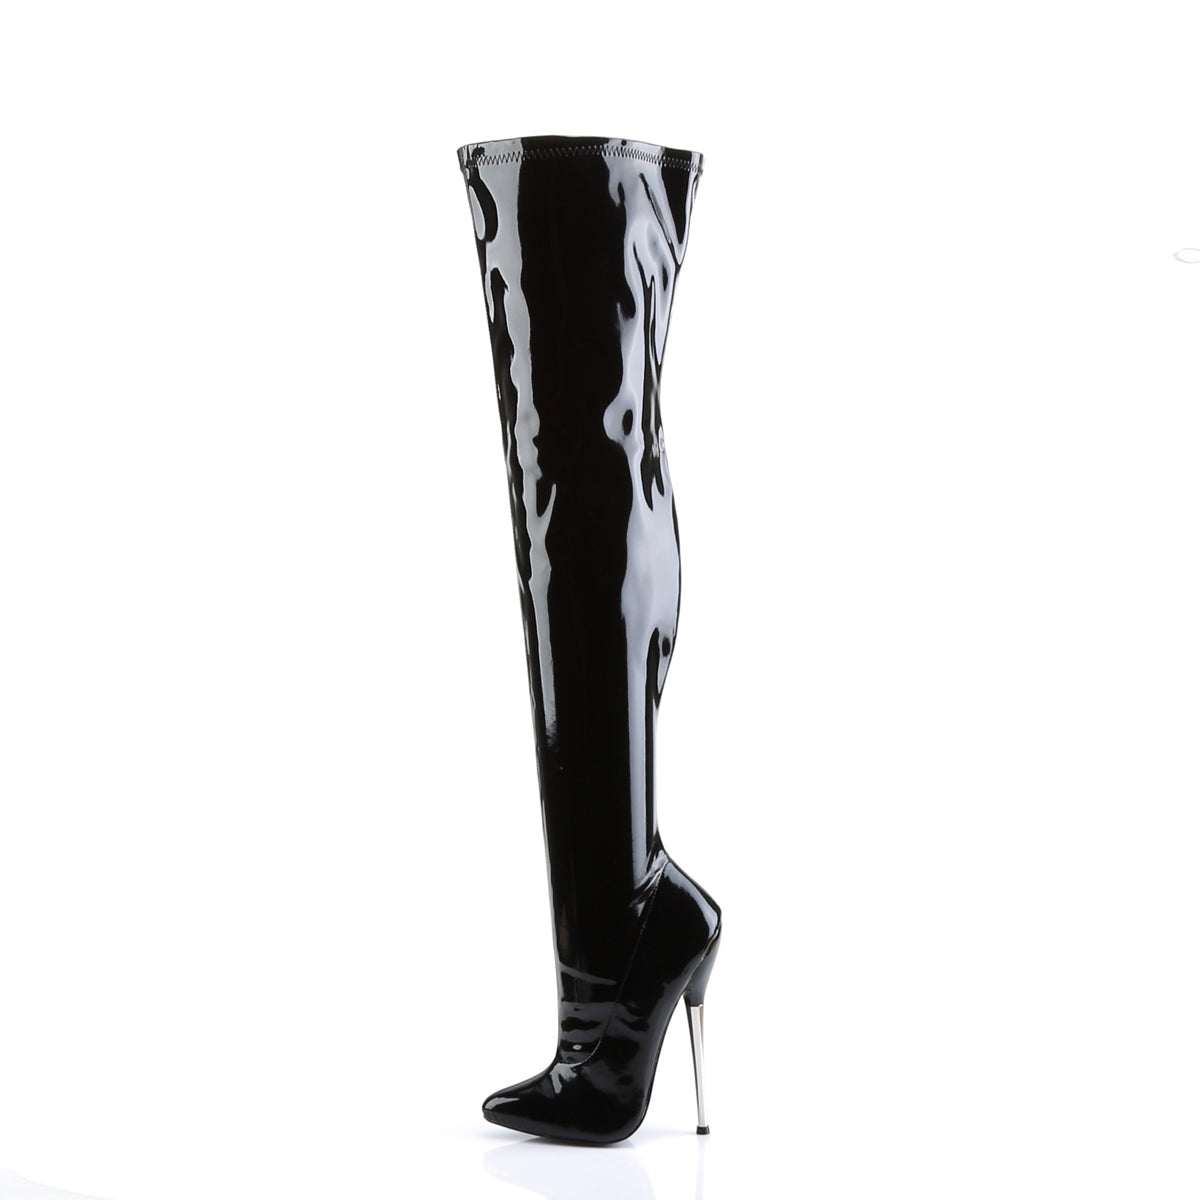 Devious Womens Boots. DAGGER-3000 BLK Stretch Pat